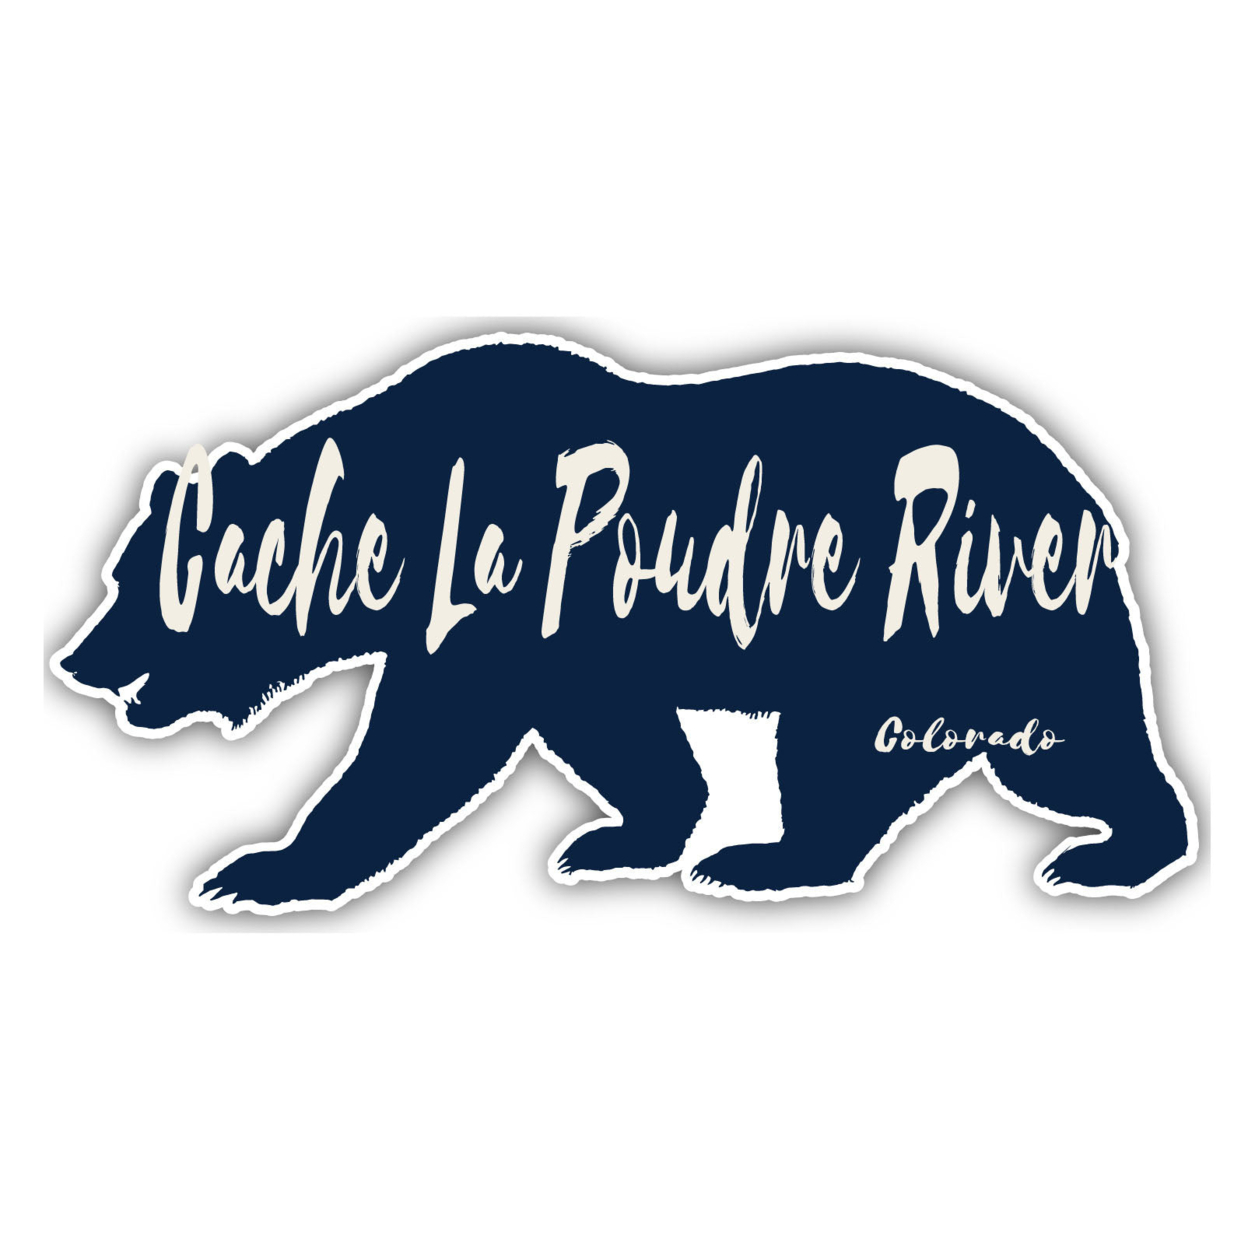 Cache La Poudre River Colorado Souvenir Decorative Stickers (Choose Theme And Size) - 4-Pack, 2-Inch, Bear